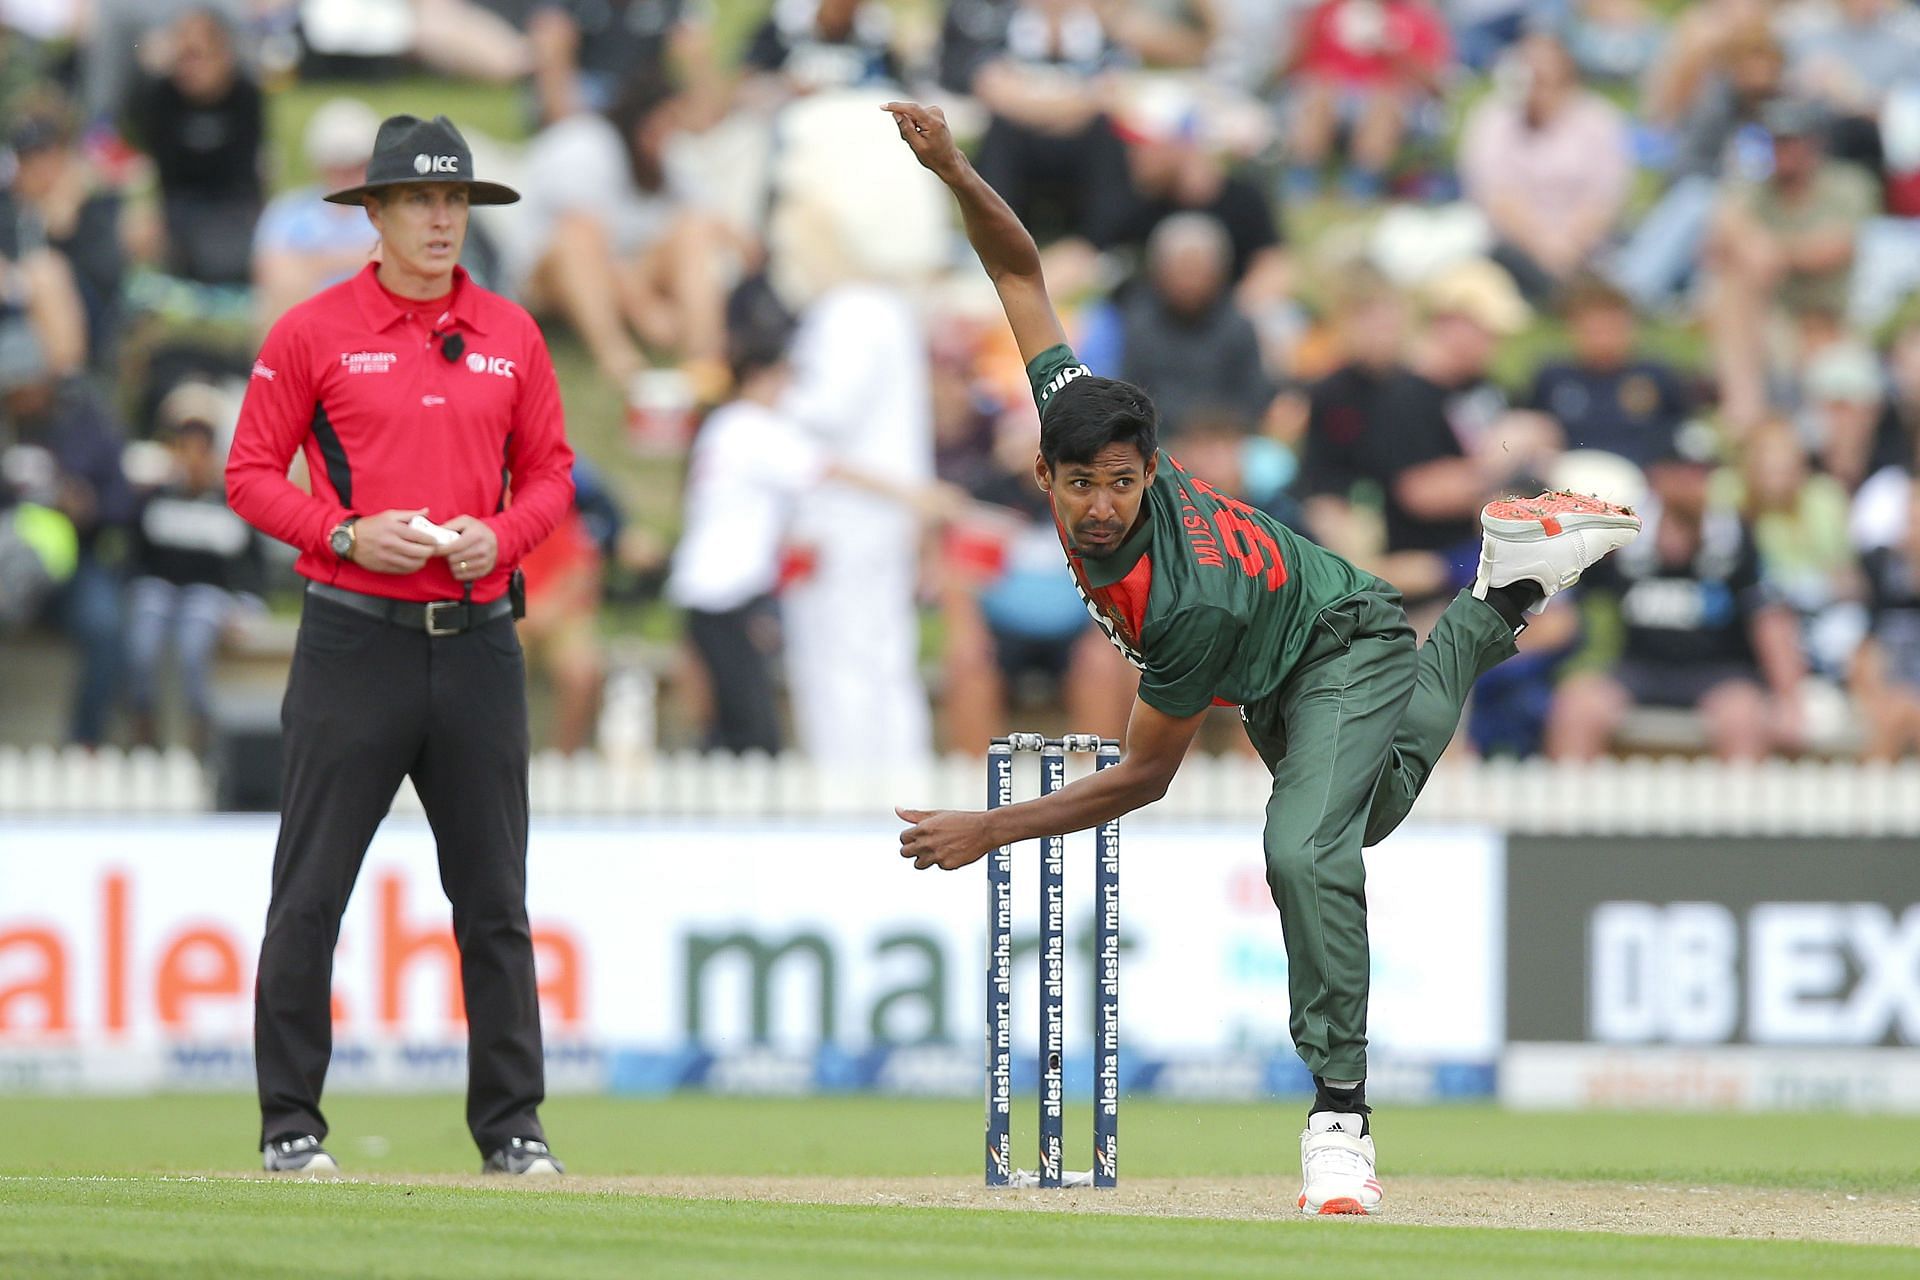 New Zealand v Bangladesh - T20 Game 1 (Image Courtesy: Getty Images)